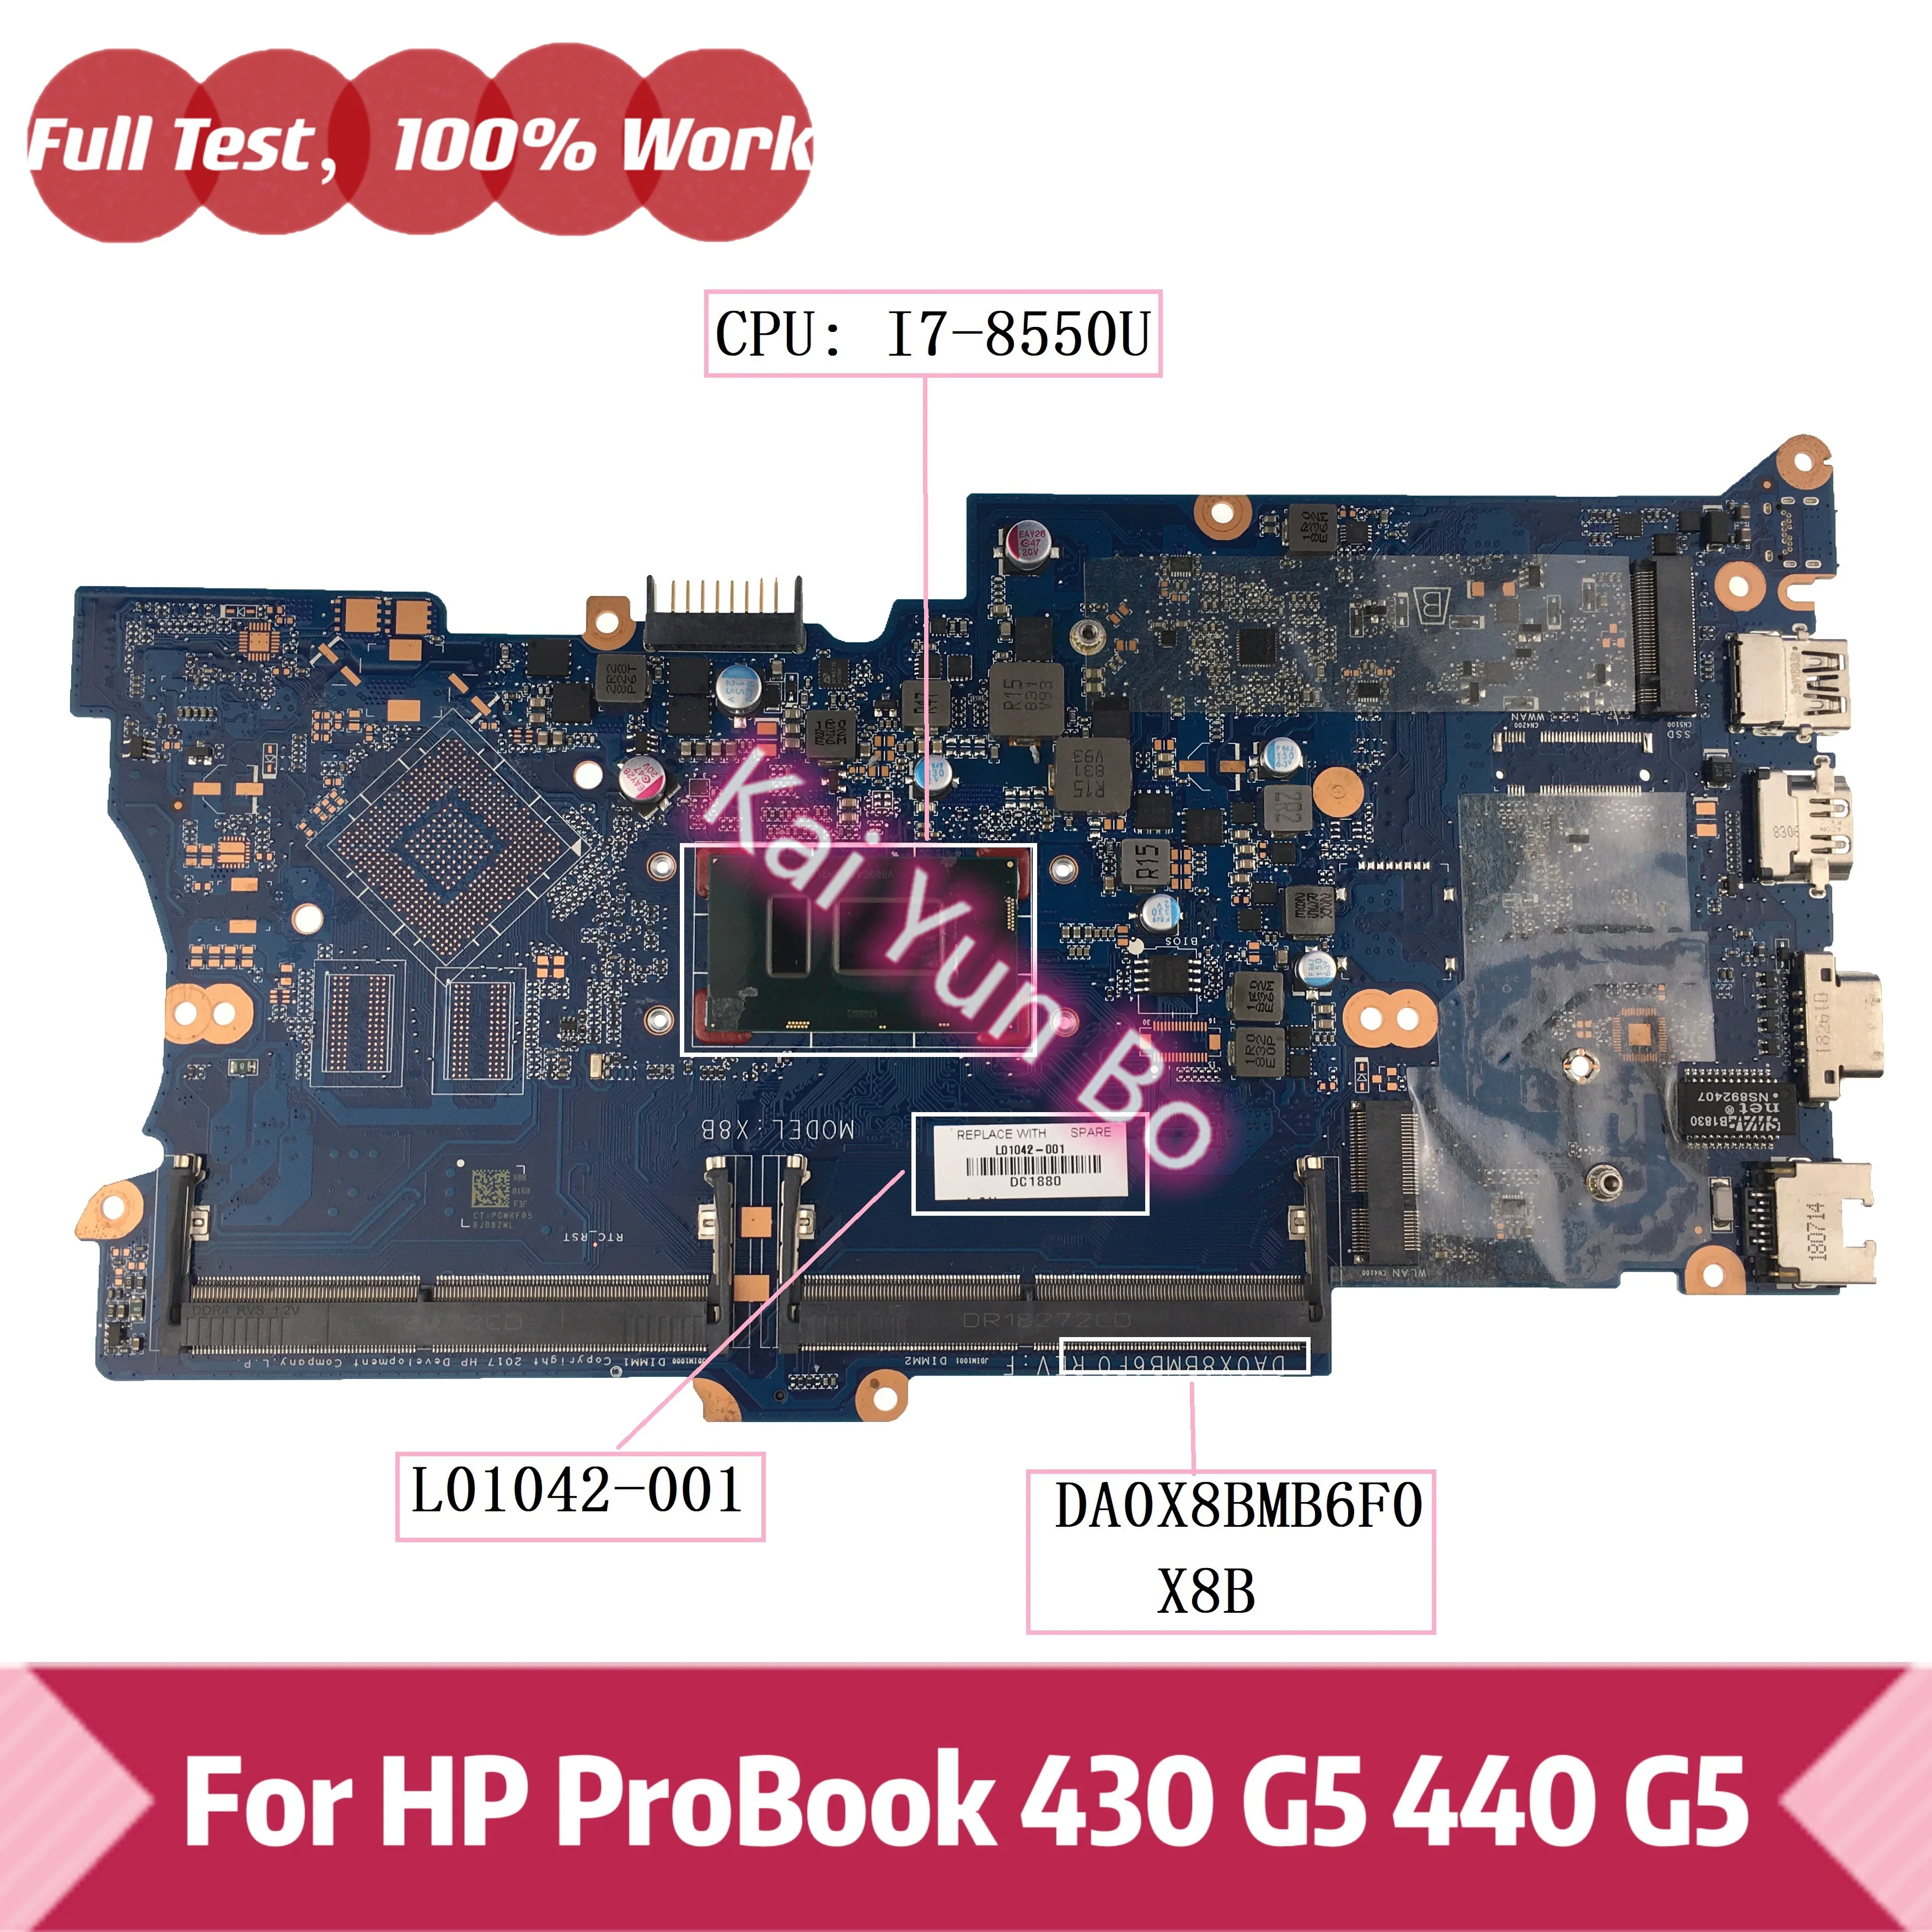 

DA0X8BMB6F0 DA0X8BMB6G0 For HP ProBook 430 G5 440 G5 Notebook L01042-001 L01042-601 Laptop Motherboard X8B with I7-8550U CPU